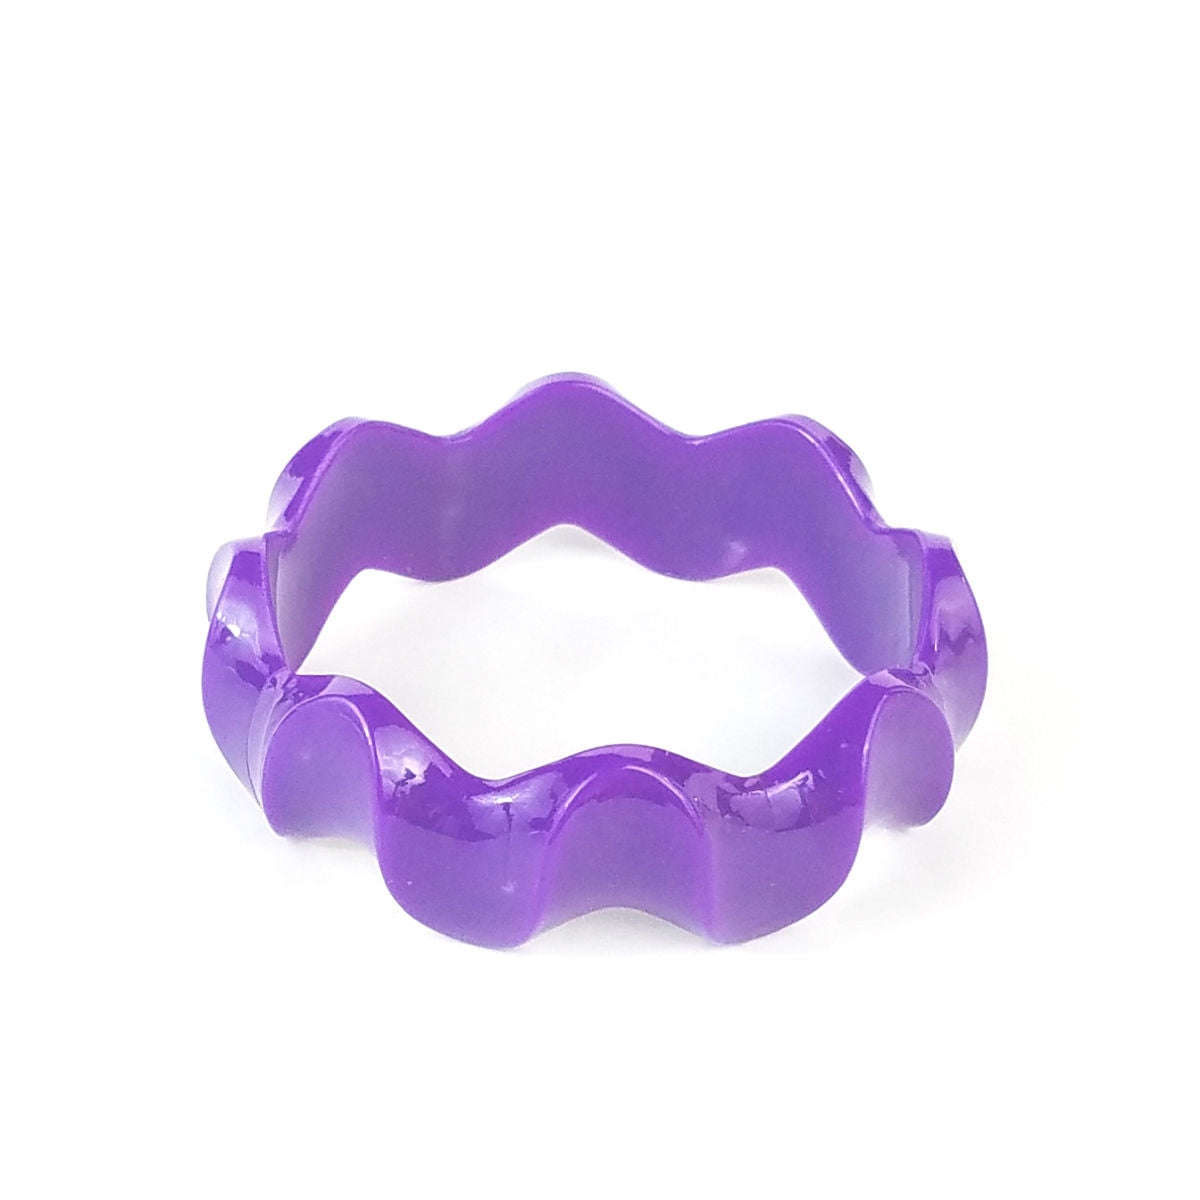 1" wide shiny plastic wavy rickrack shape bangle in bright purple